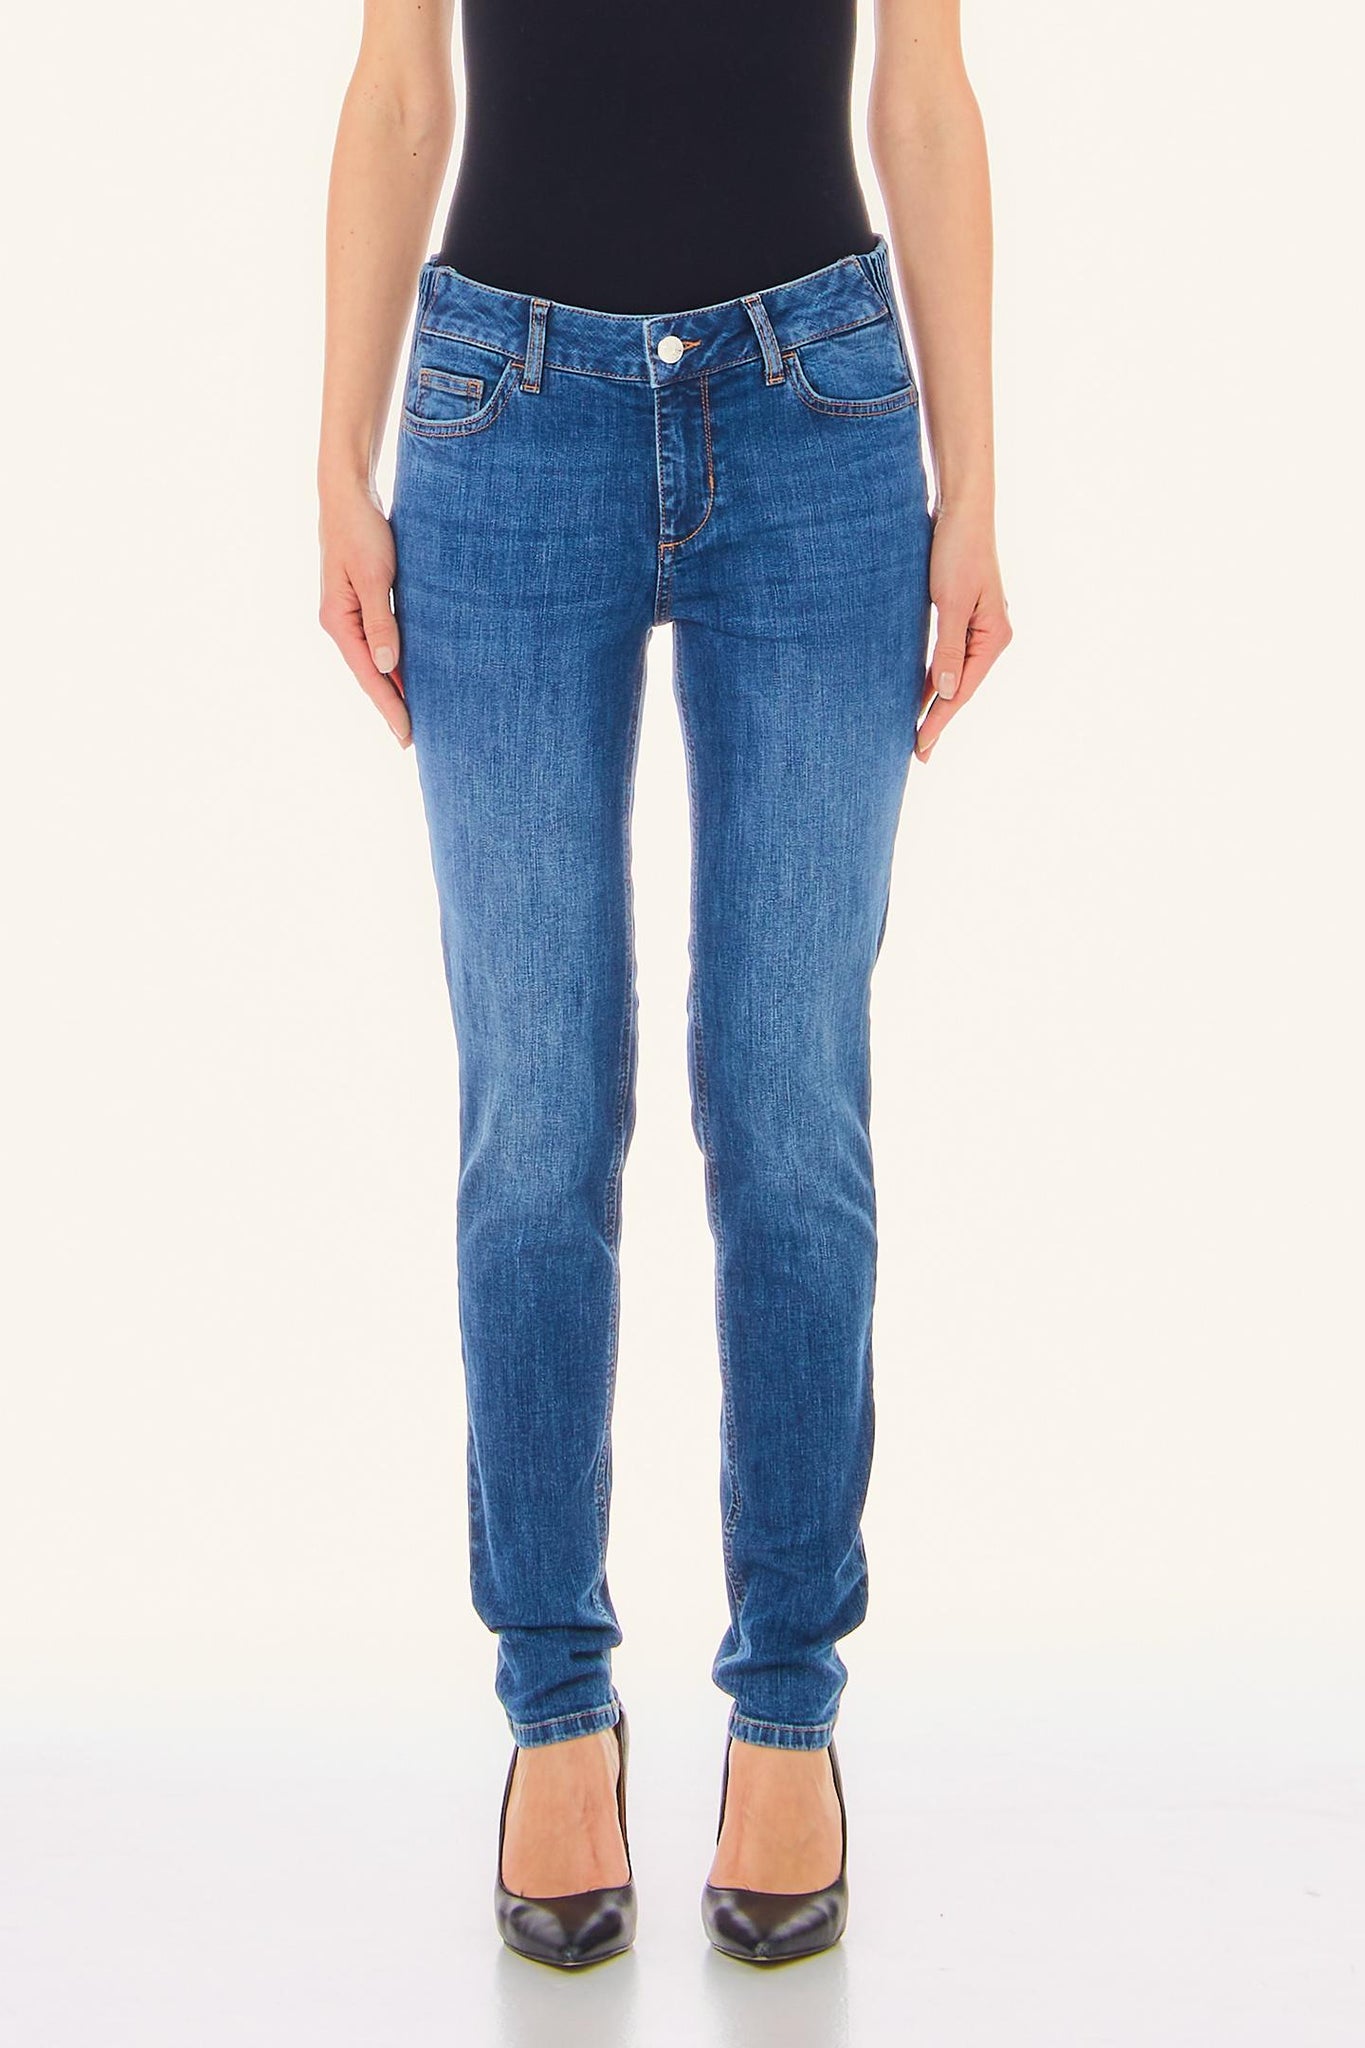 Jeans Bottom Up in Denim / Jeans - Ideal Moda